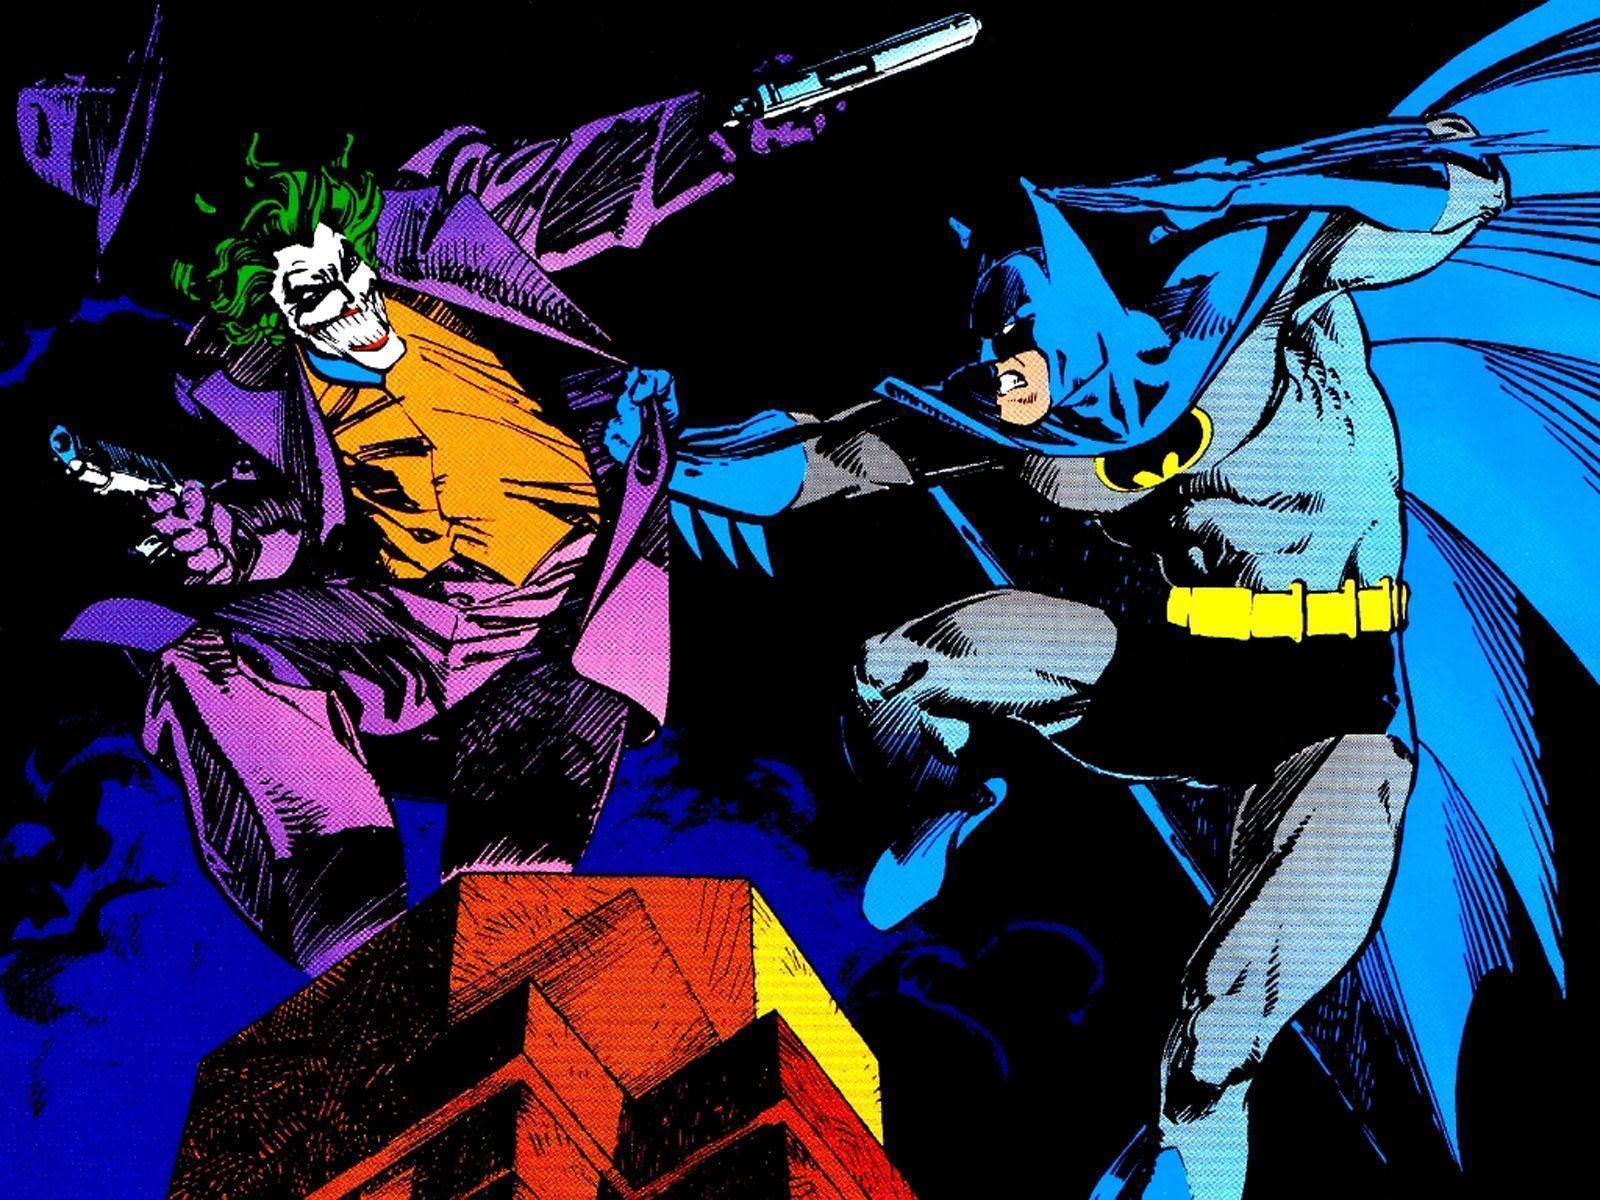 Batman vs Joker Battle Diorama Statue - Spec Fiction Shop